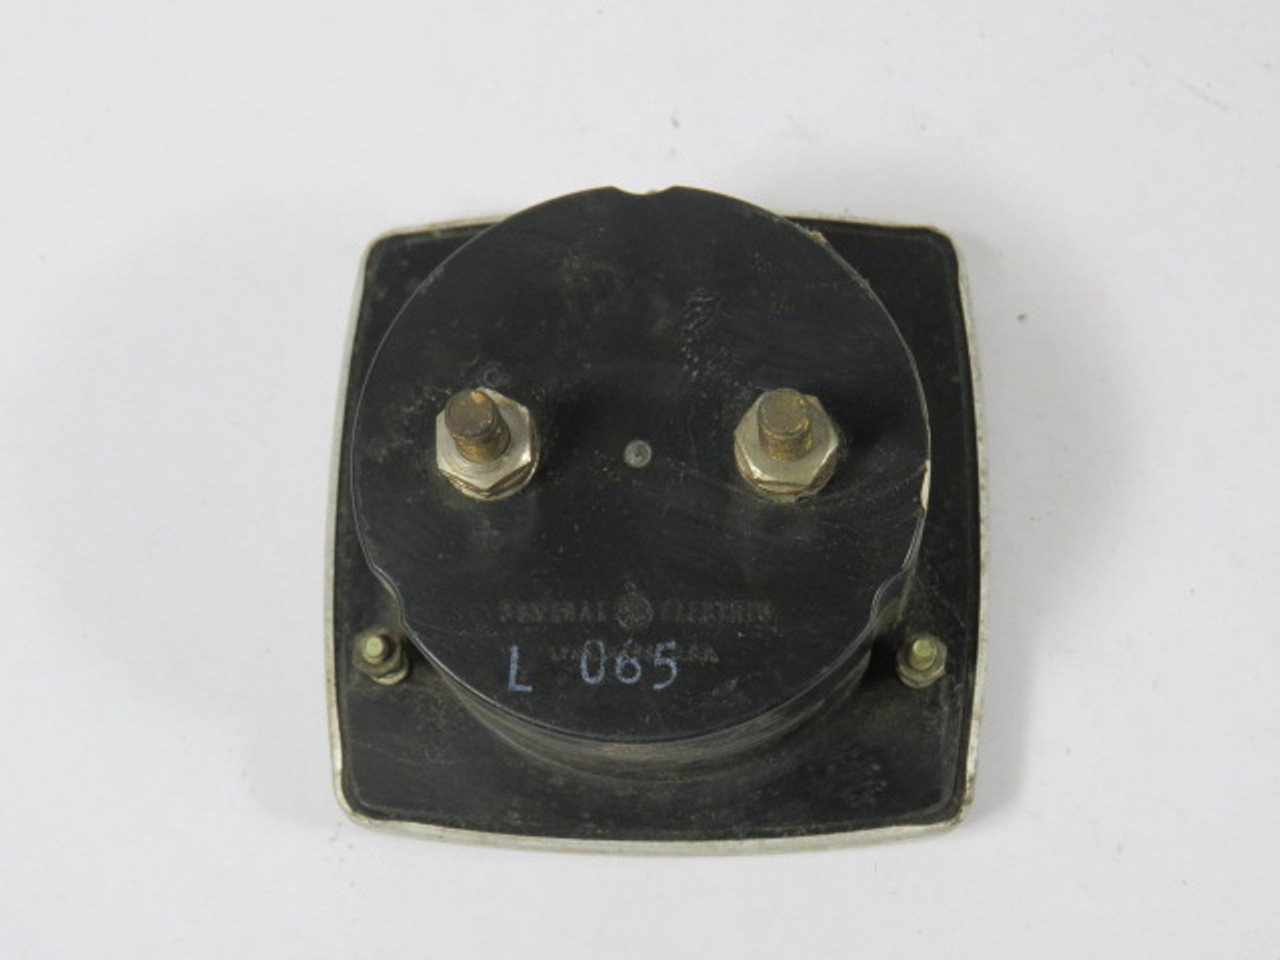 General Electric L543-LSPK AC Panel Meter Range 0-100 Amps USED